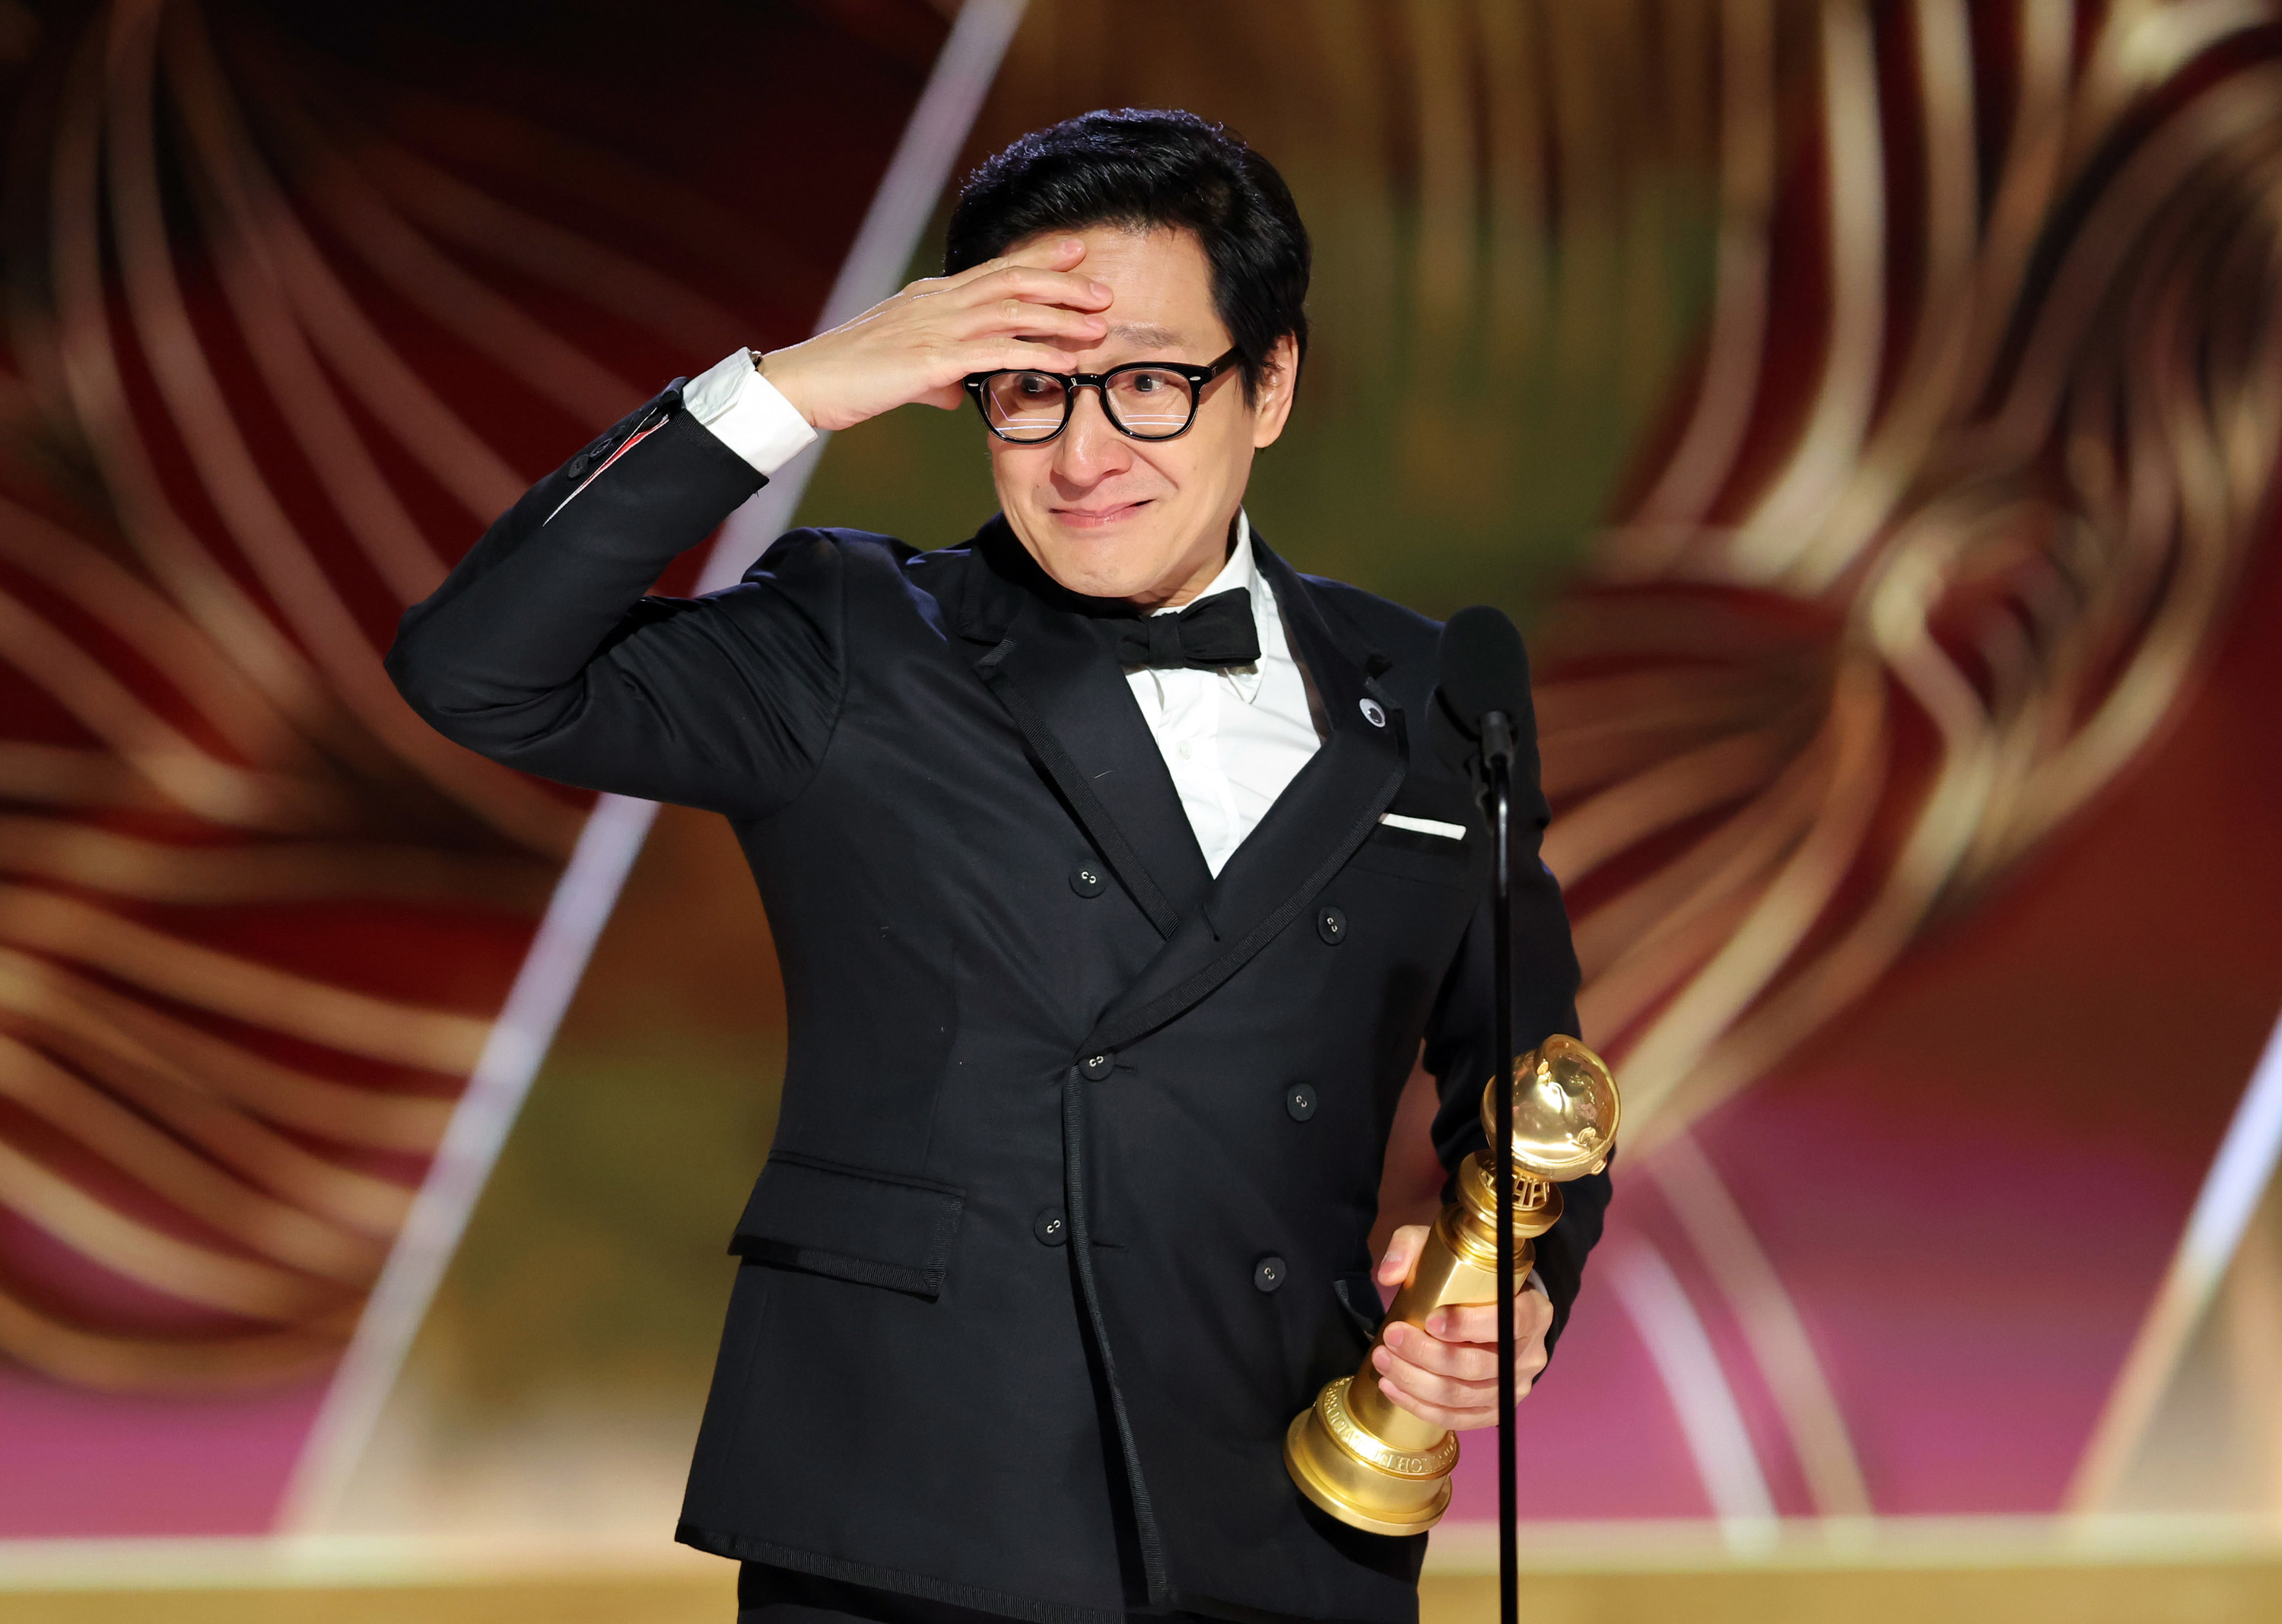 An emotional Ke Huy Quan giving his acceptance speech